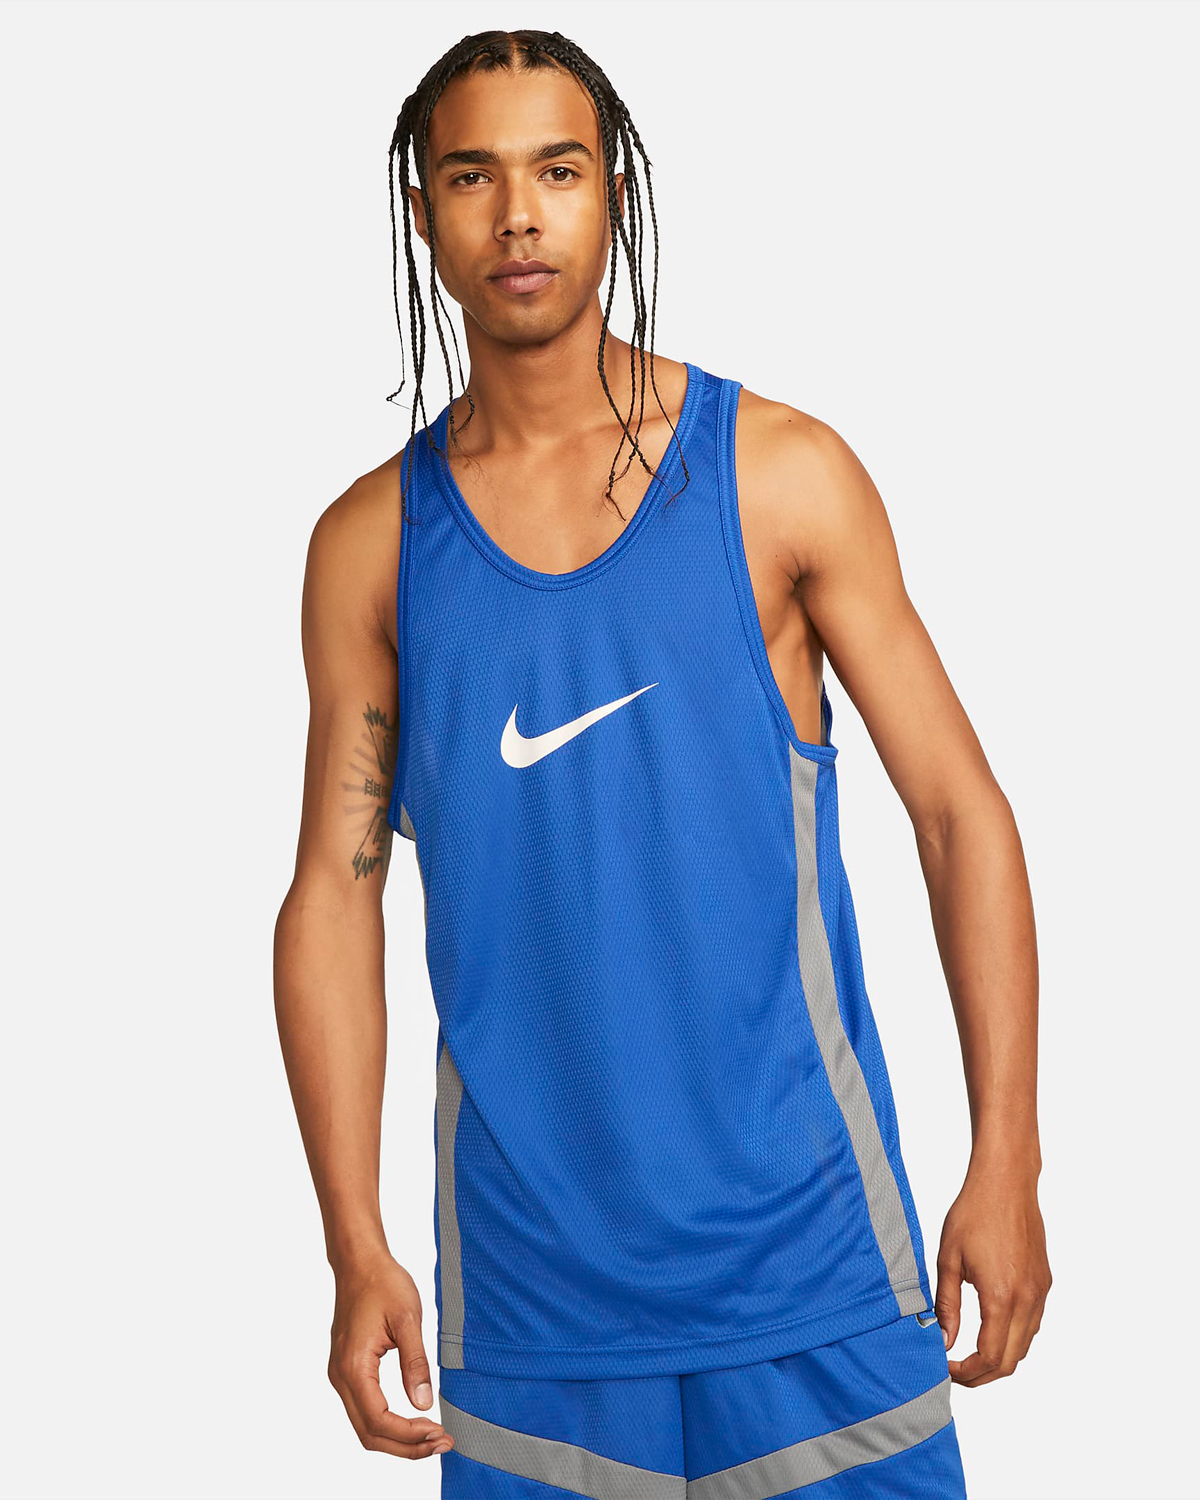 Nike-Icon-Basketball-Jersey-Game-Royal-Cool-Grey